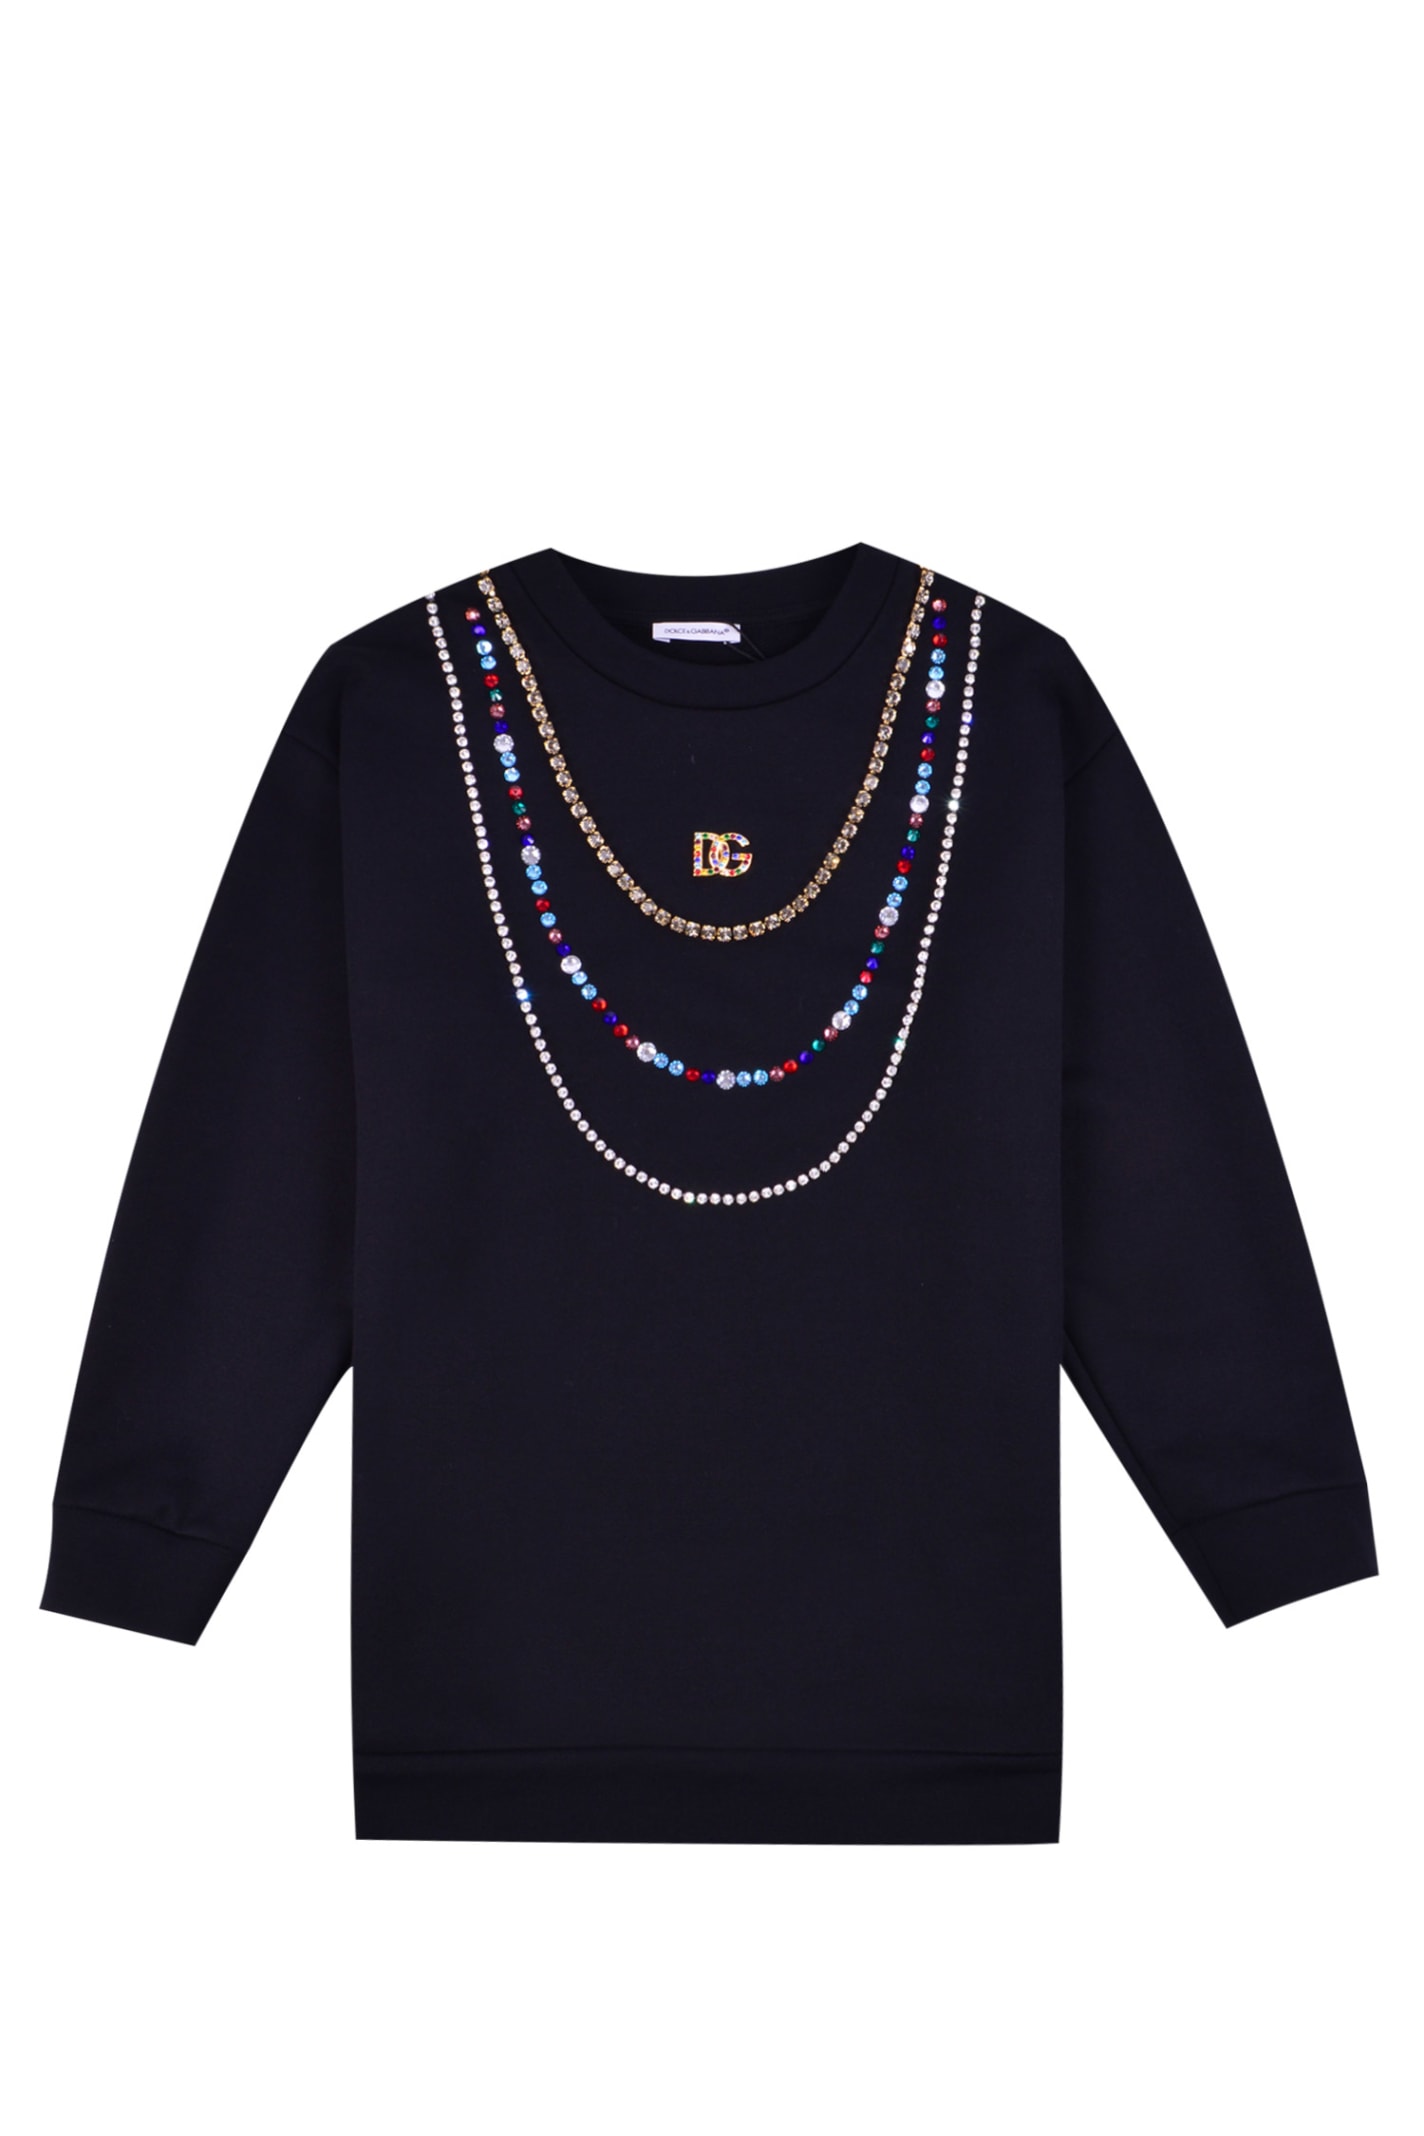 Dolce & Gabbana Jersey Dress With Bejeweled Appliqués